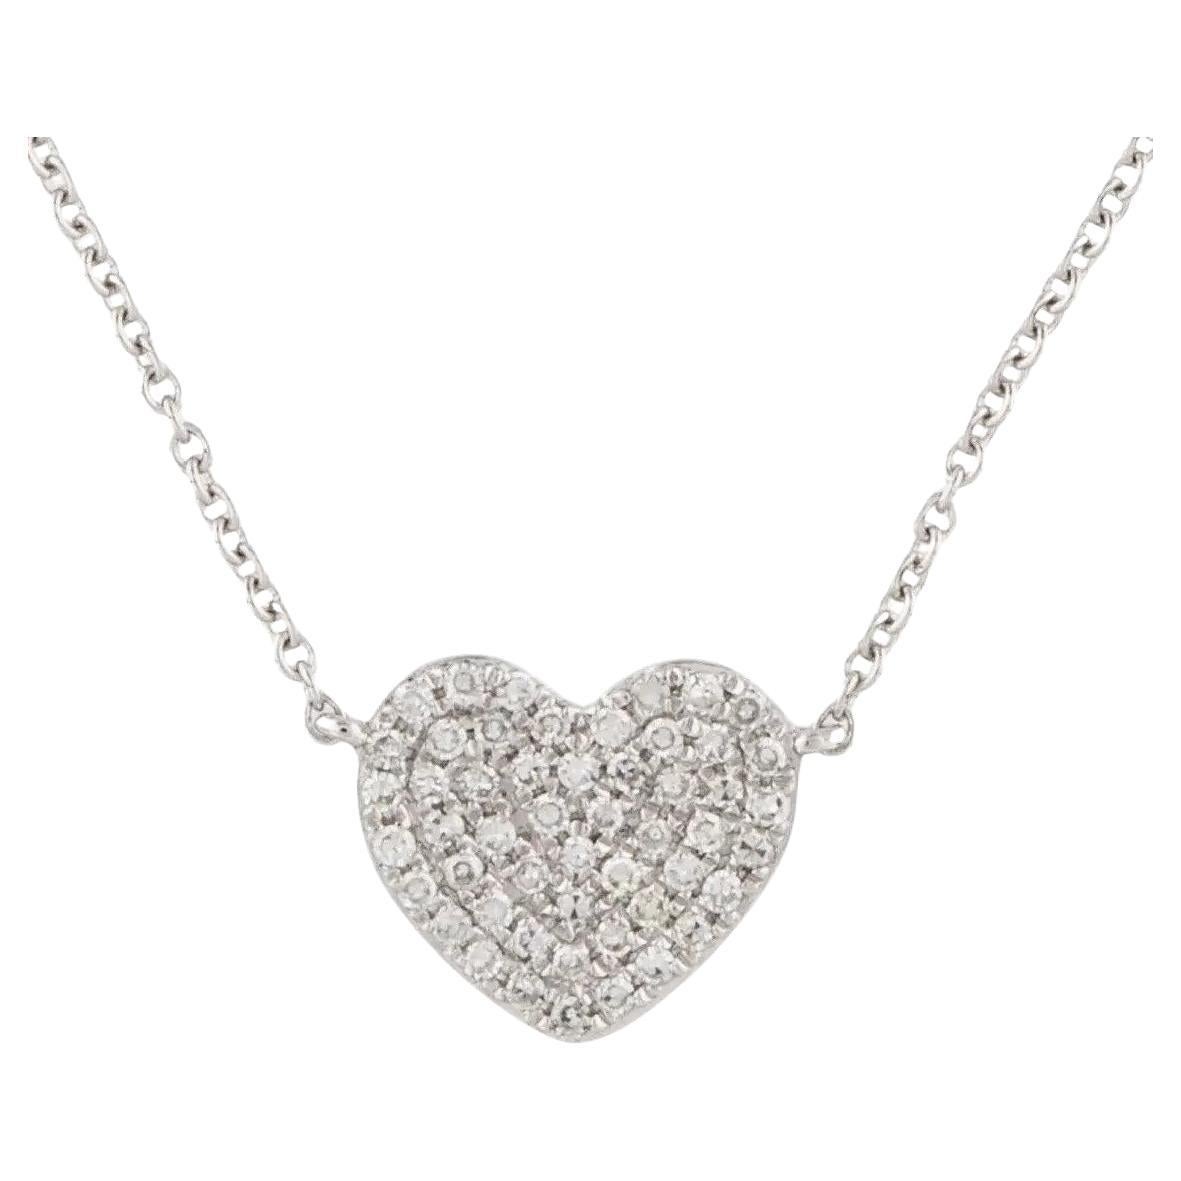 0.16 Carat Diamond Heart White Gold Pendant